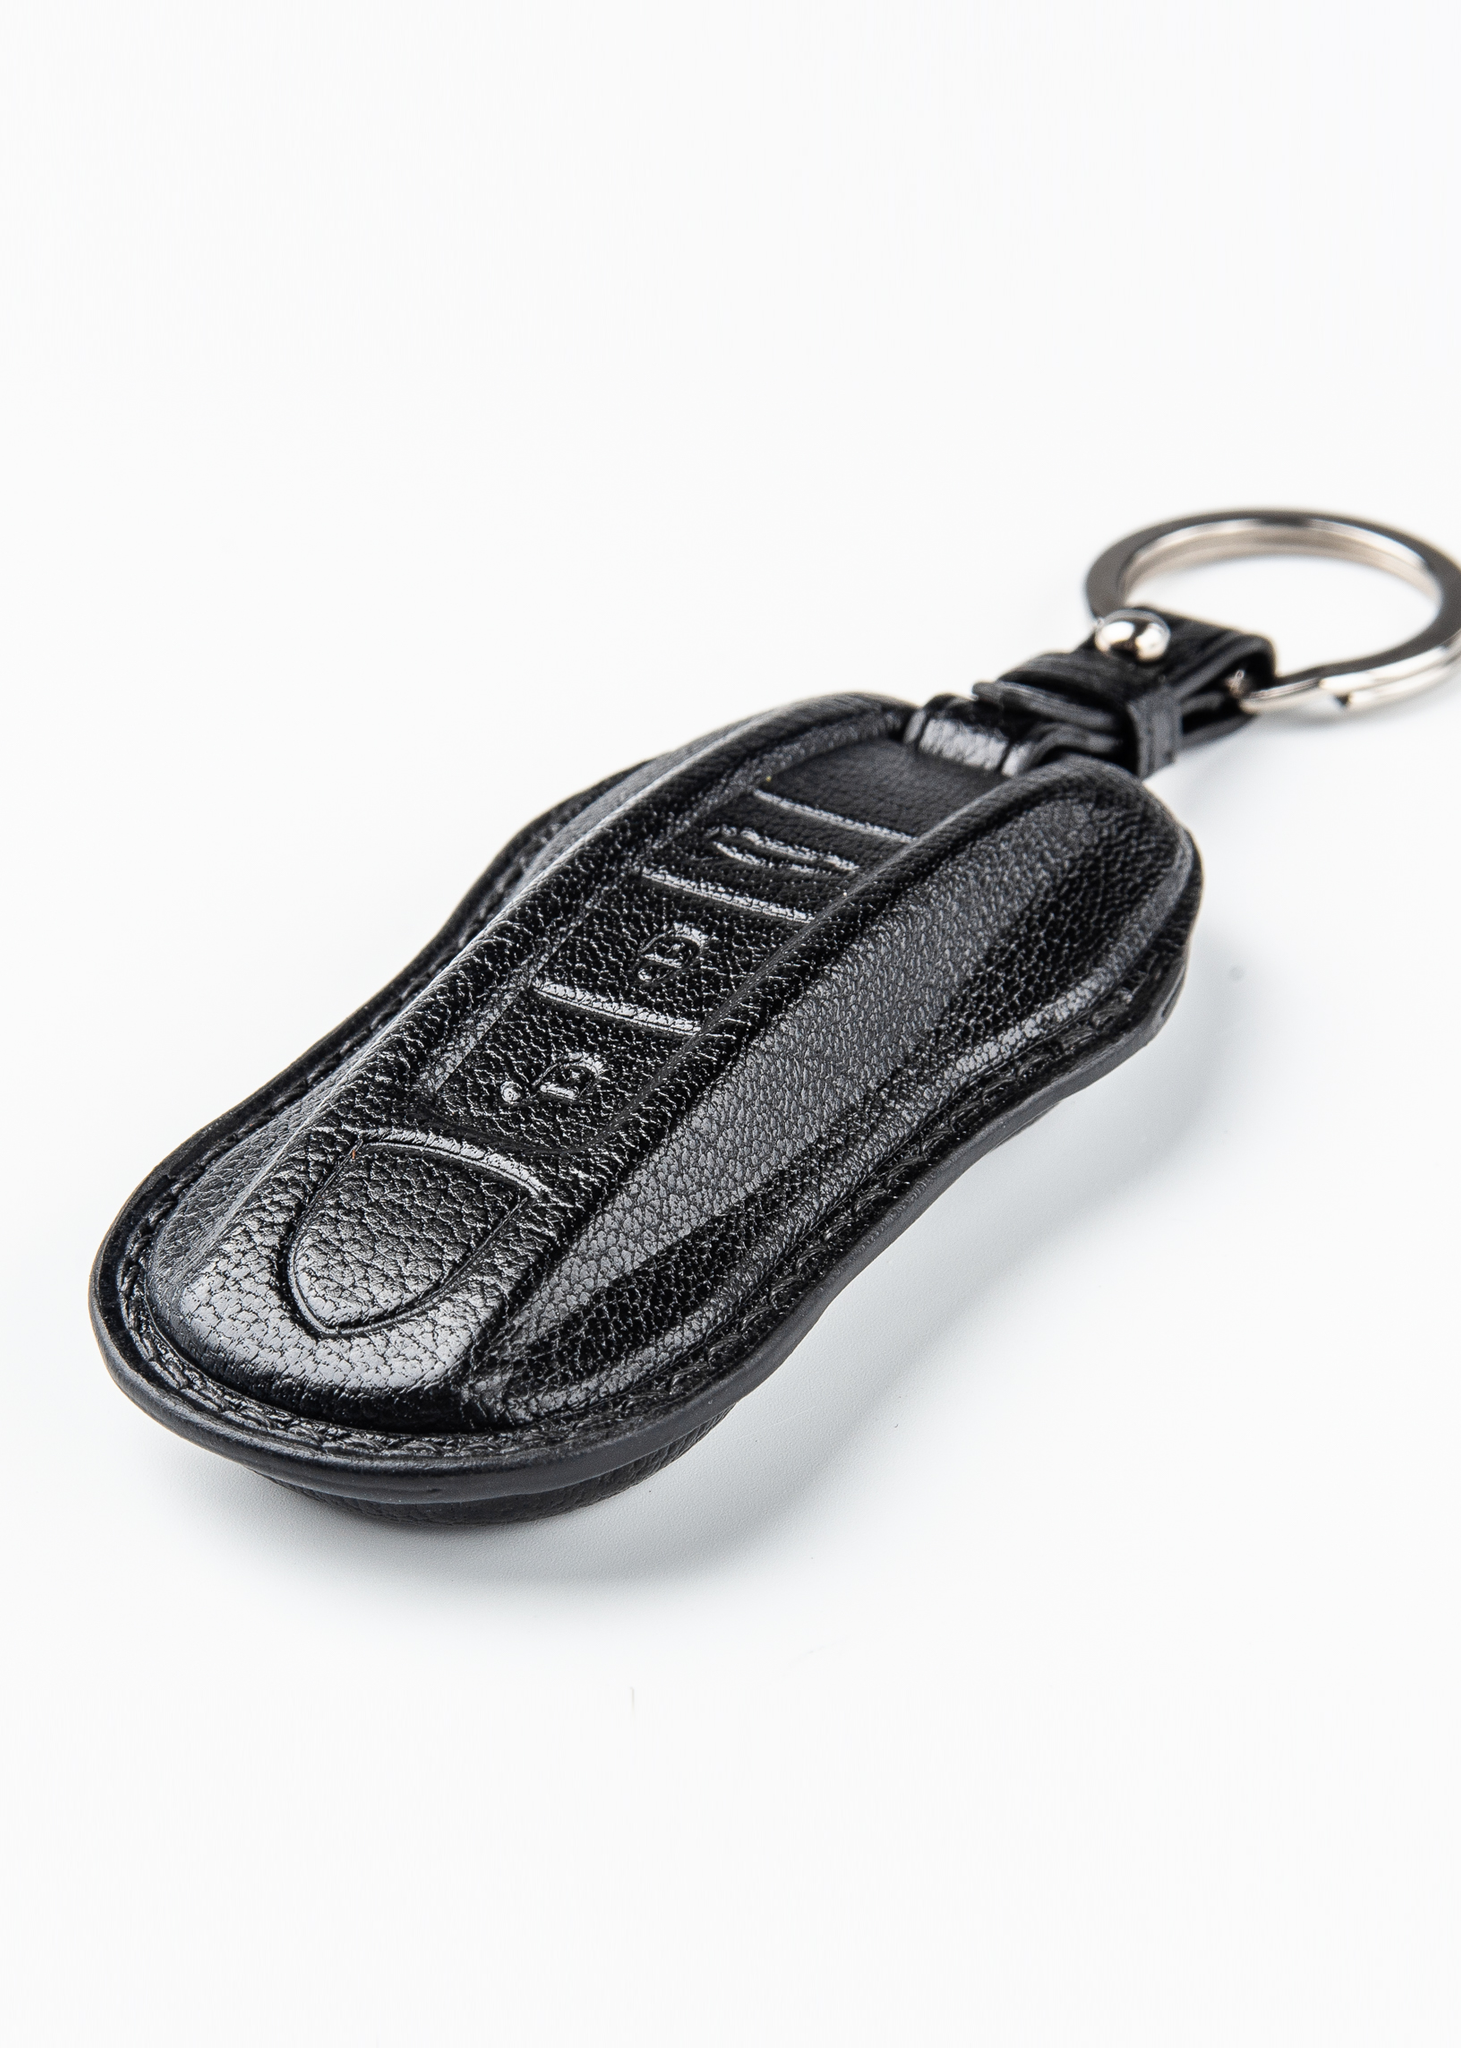 Timotheus for Porsche key fob cover case, Compatible with Porsche key case, Handmade Genuine Leather for Porsche keychains | PR44